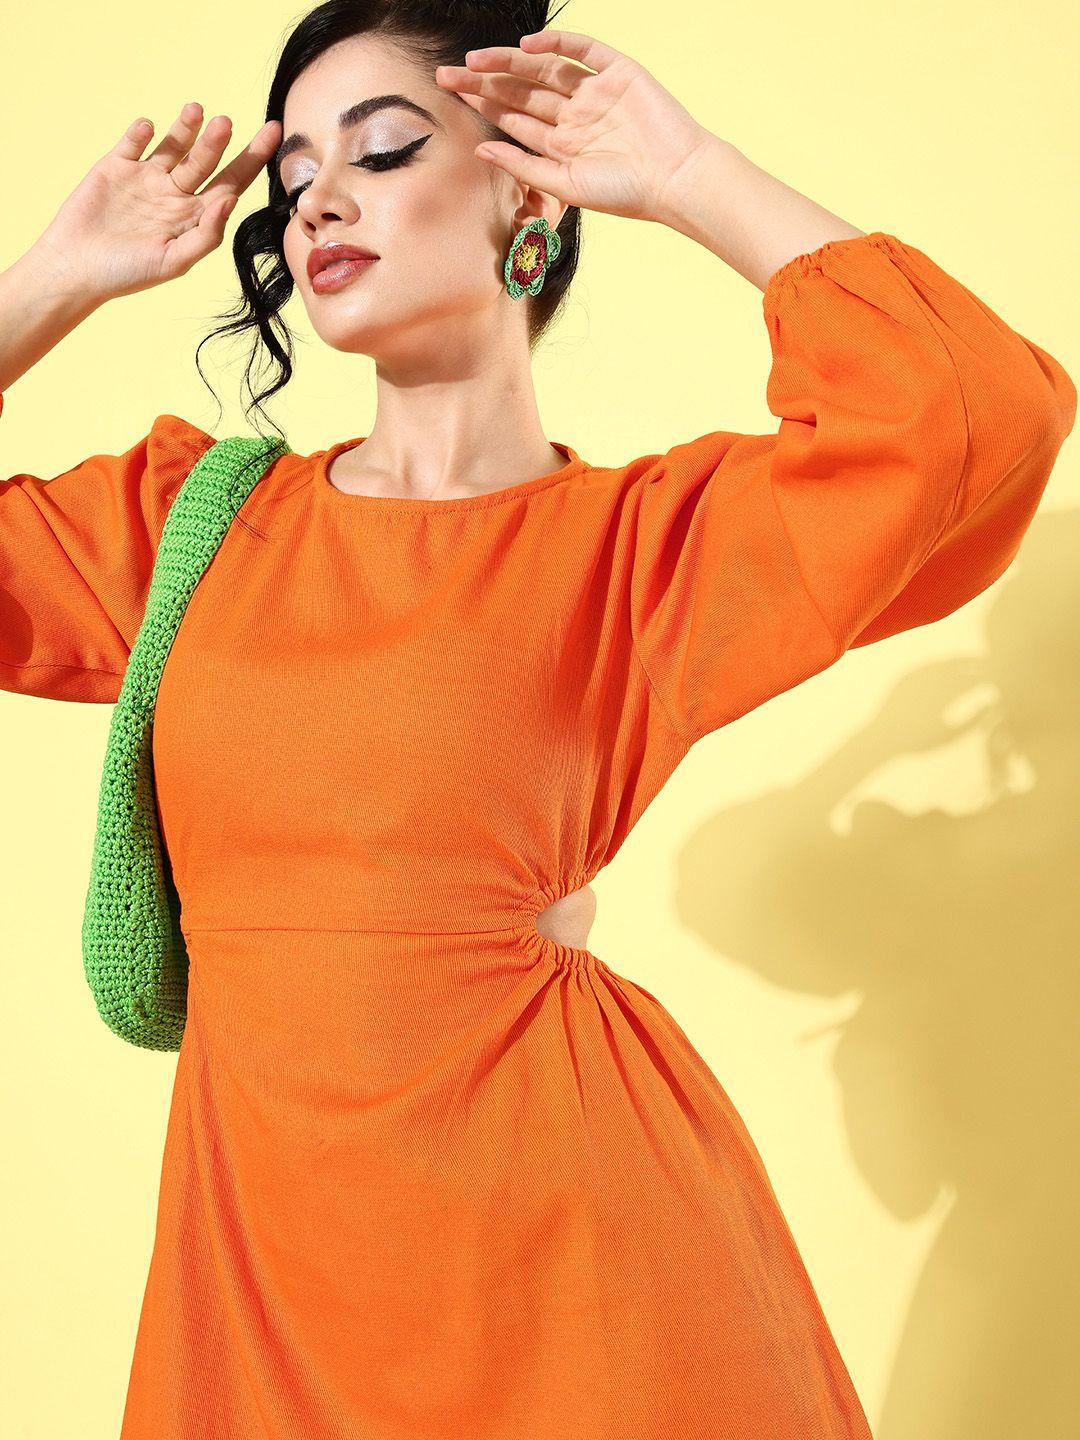 mast & harbour radiant orange retro optimism resort wear pure cotton fit & flared dress